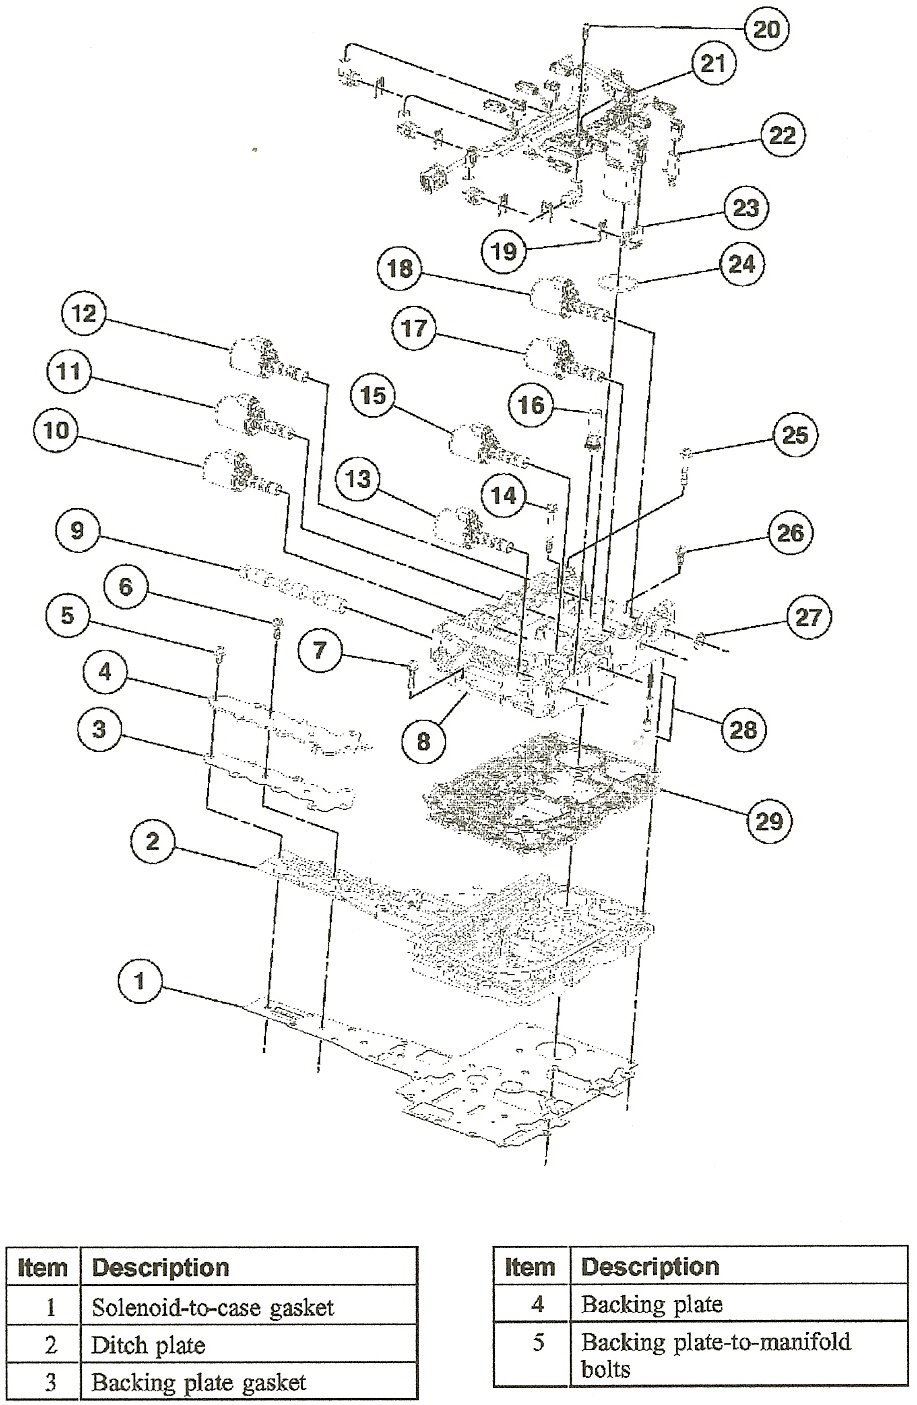 1994 e4od with idi transmission wiring diagram